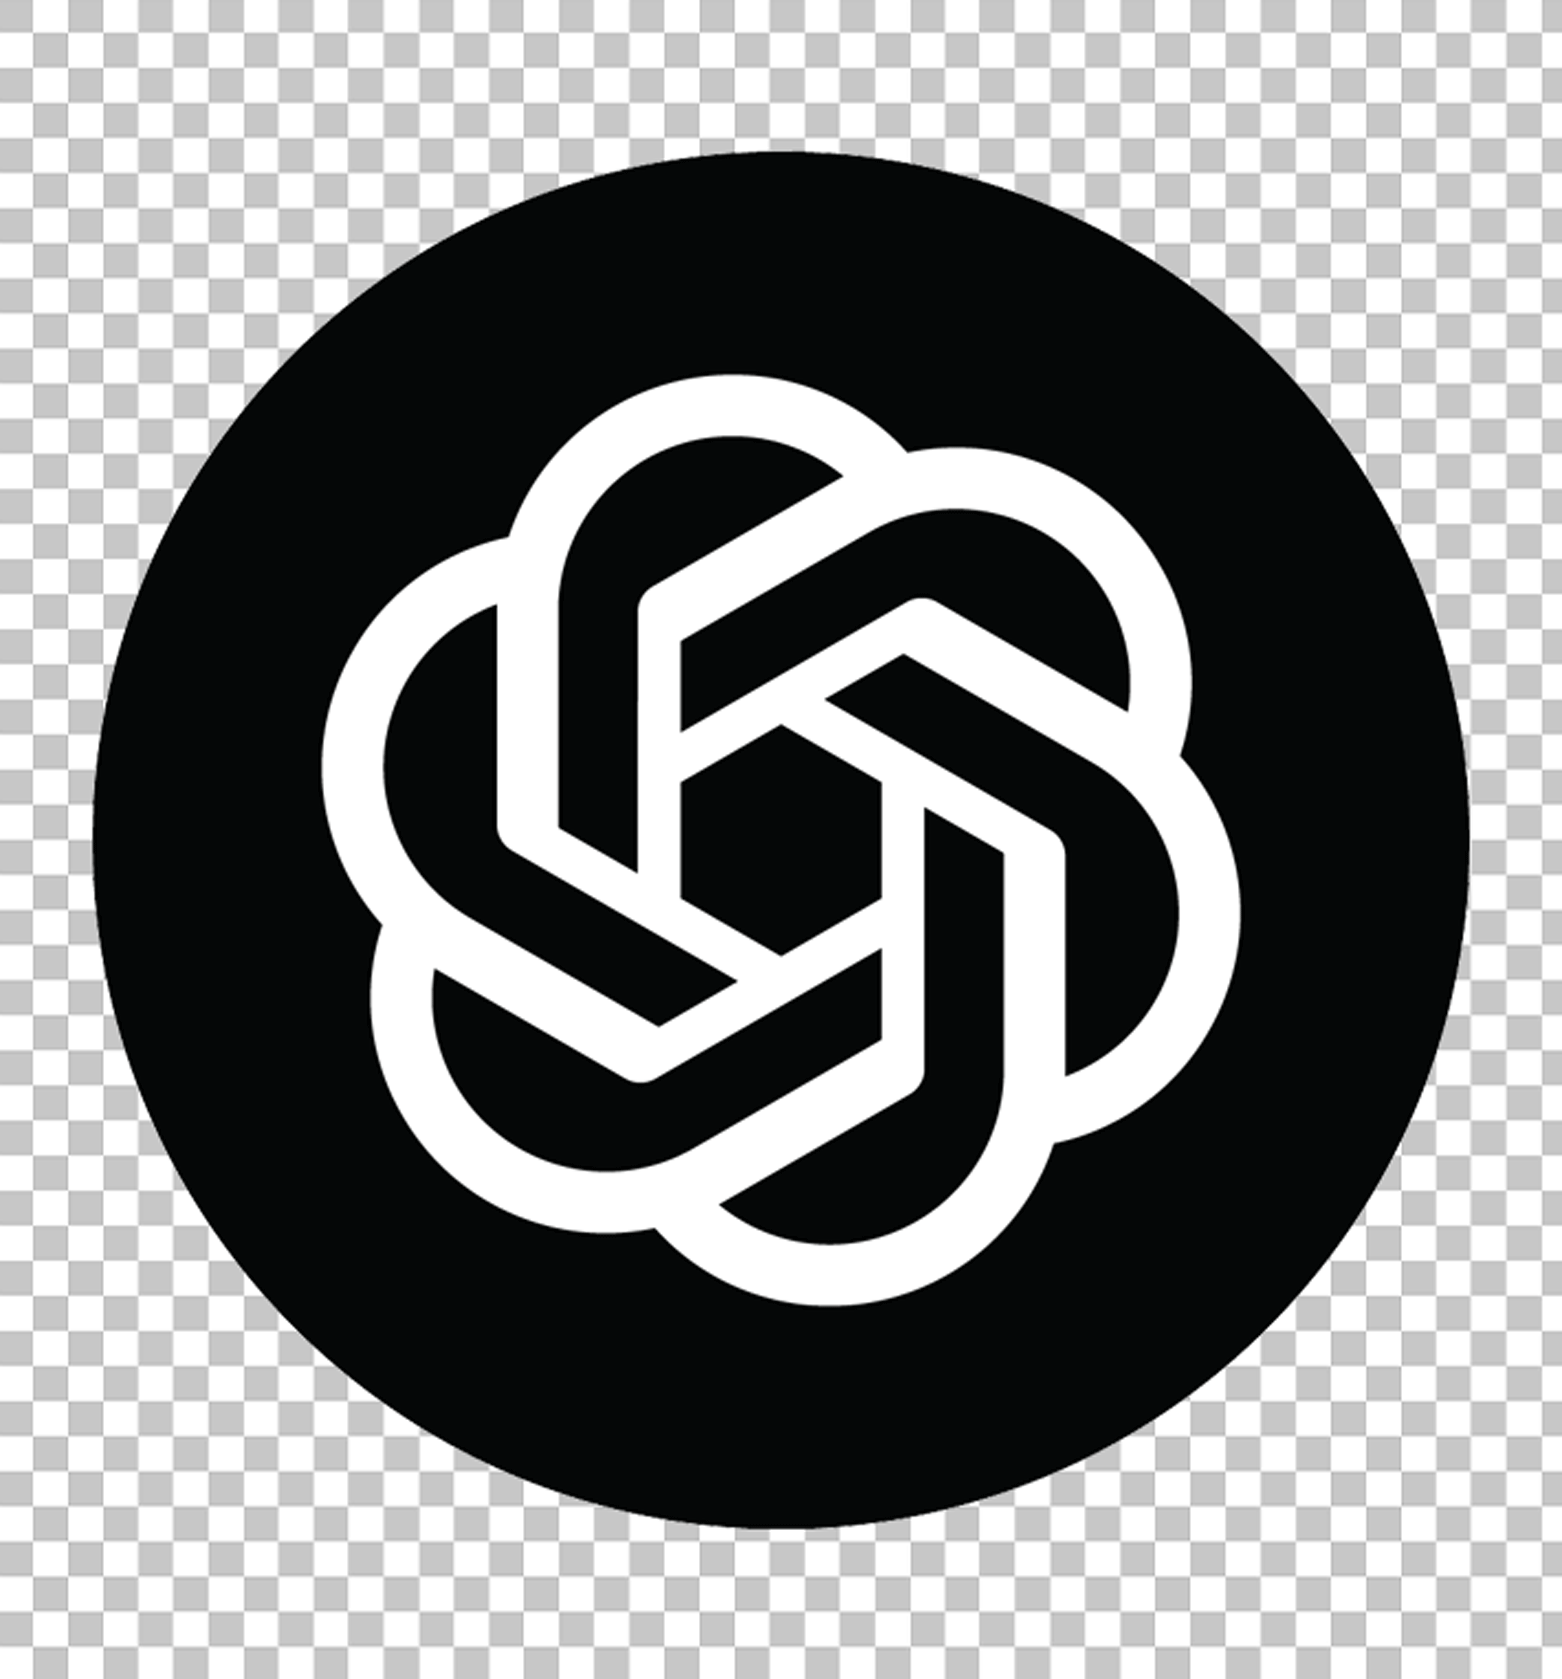 ChatGPT black circle logo PNG Image